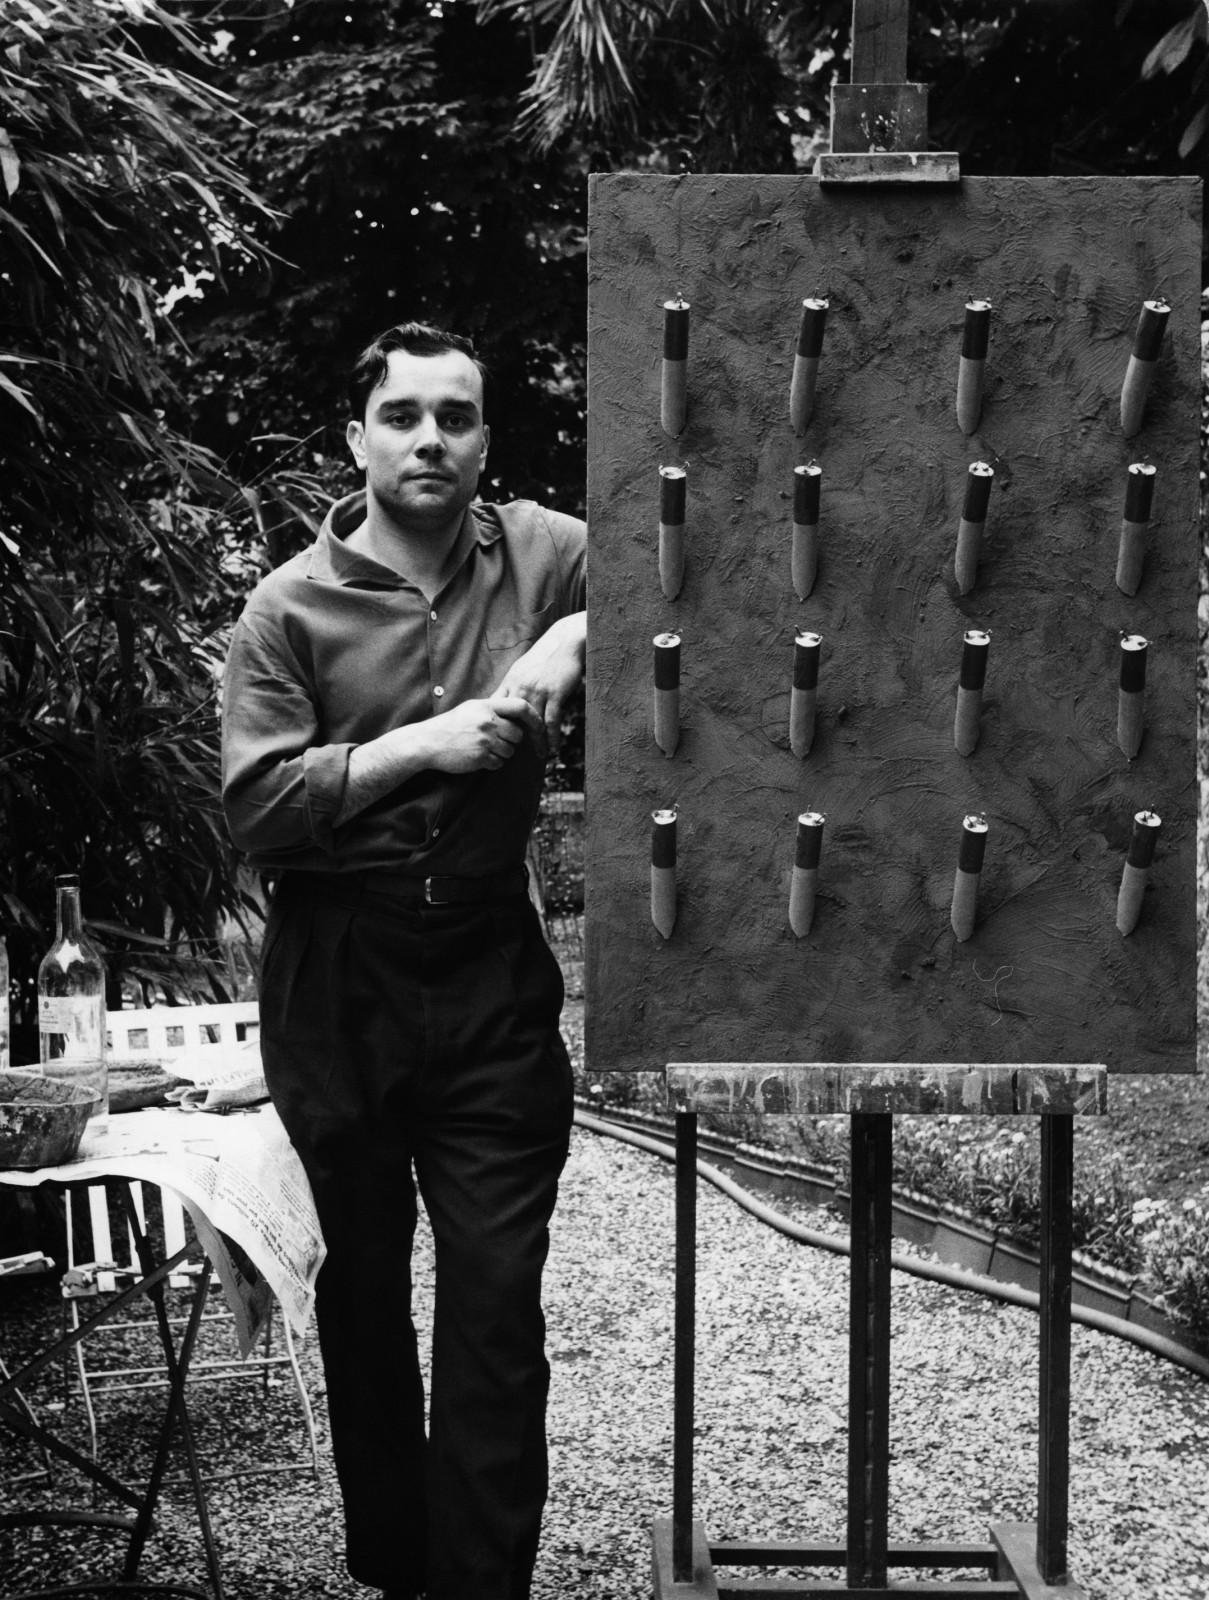 Yves Klein in front of his artwork "Tableau de feu bleu d’une minute", (M 41),in the garden of the Colette Allendy Gallery, Paris, 1957